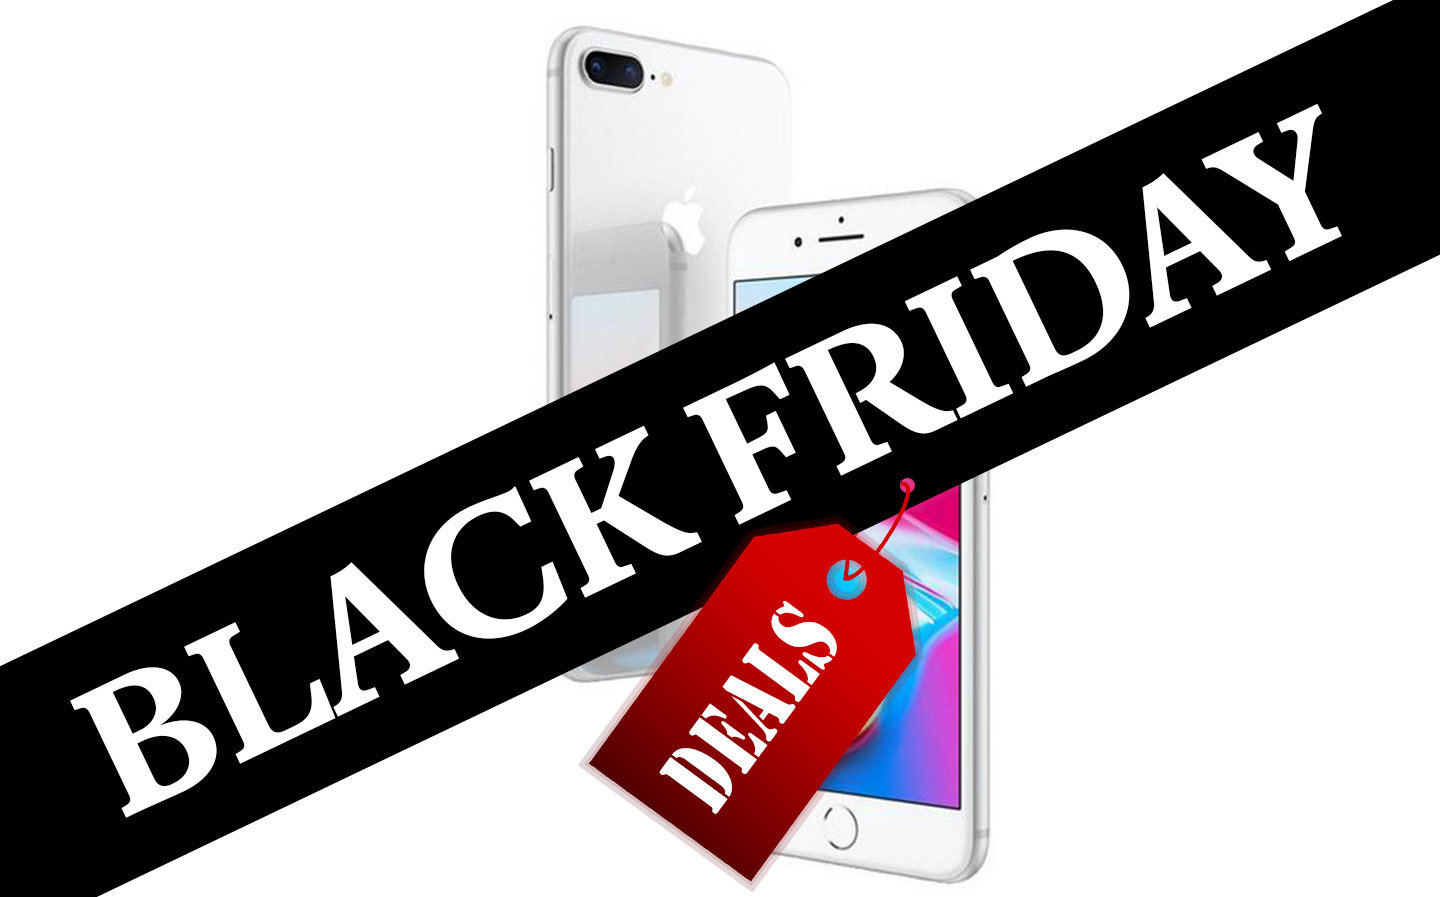 Black Friday smartphone deals